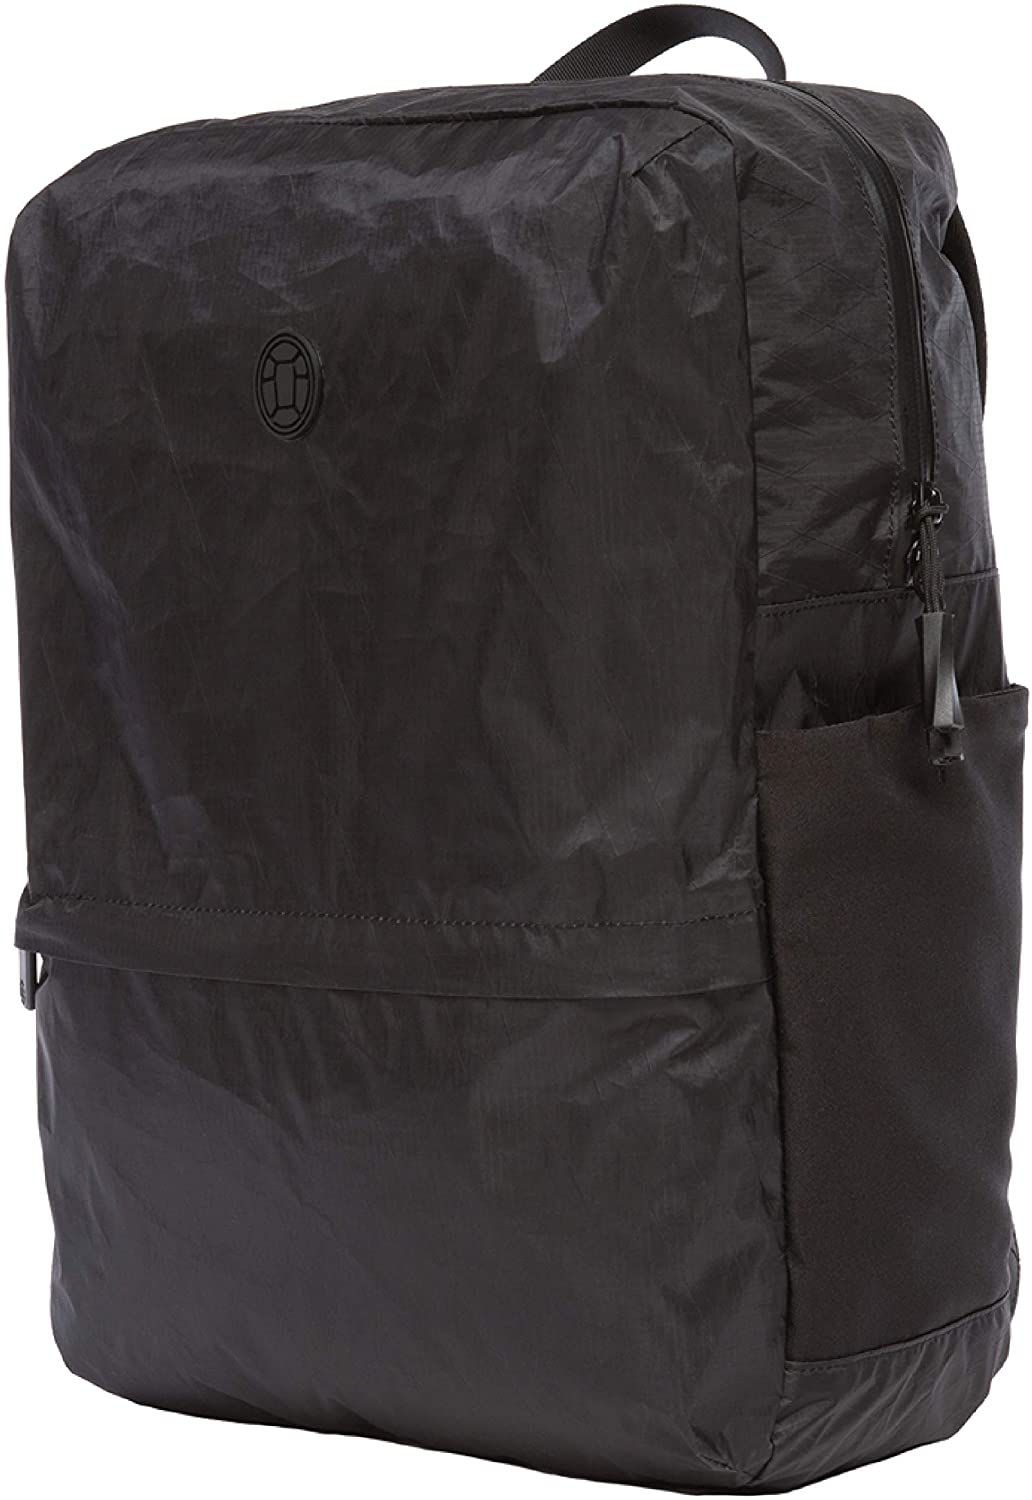 Backpacks with Luggage Sleeve